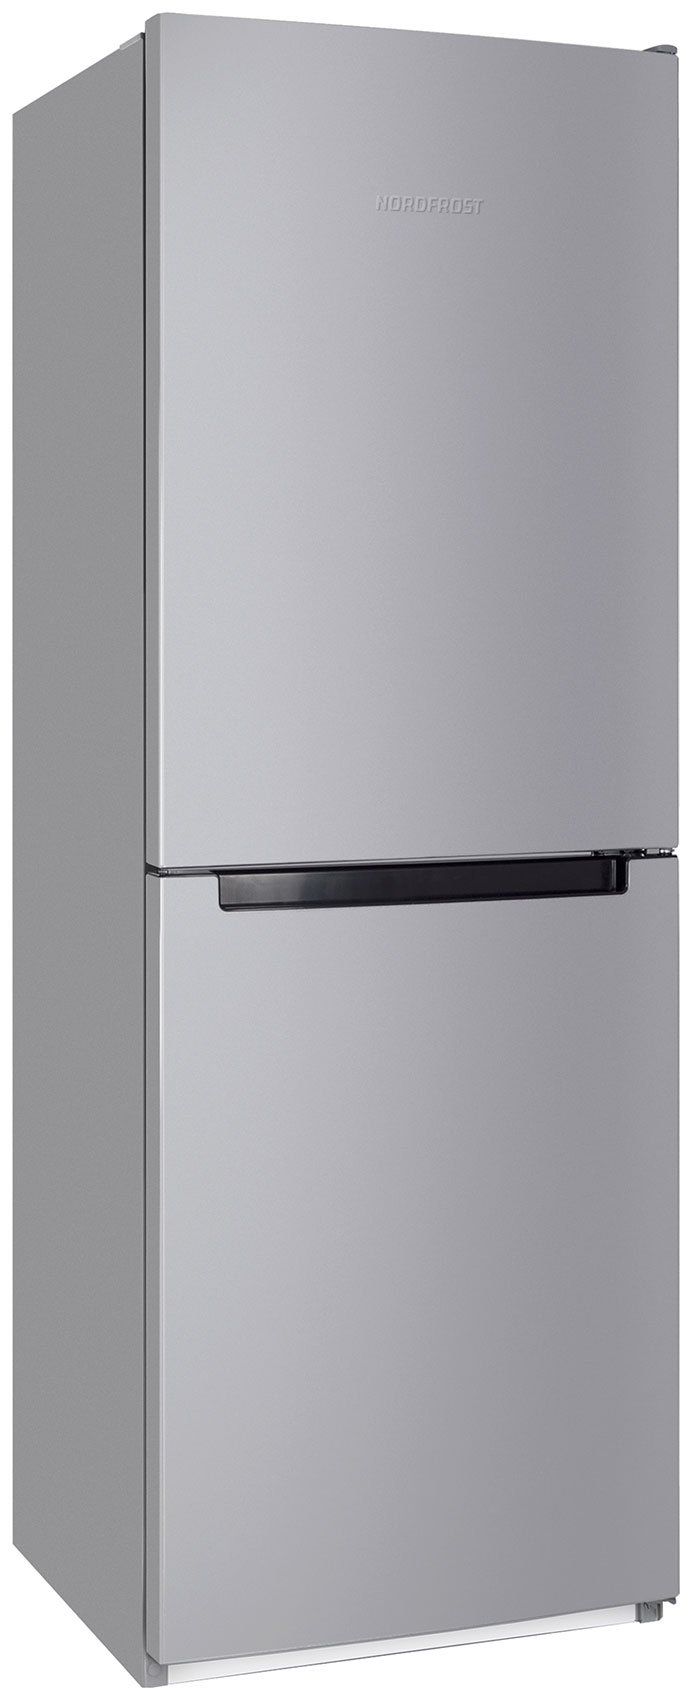 Холодильник NordFrost NRB 151 S серебристый холодильник liebherr rbsfe 5220 20 серебристый